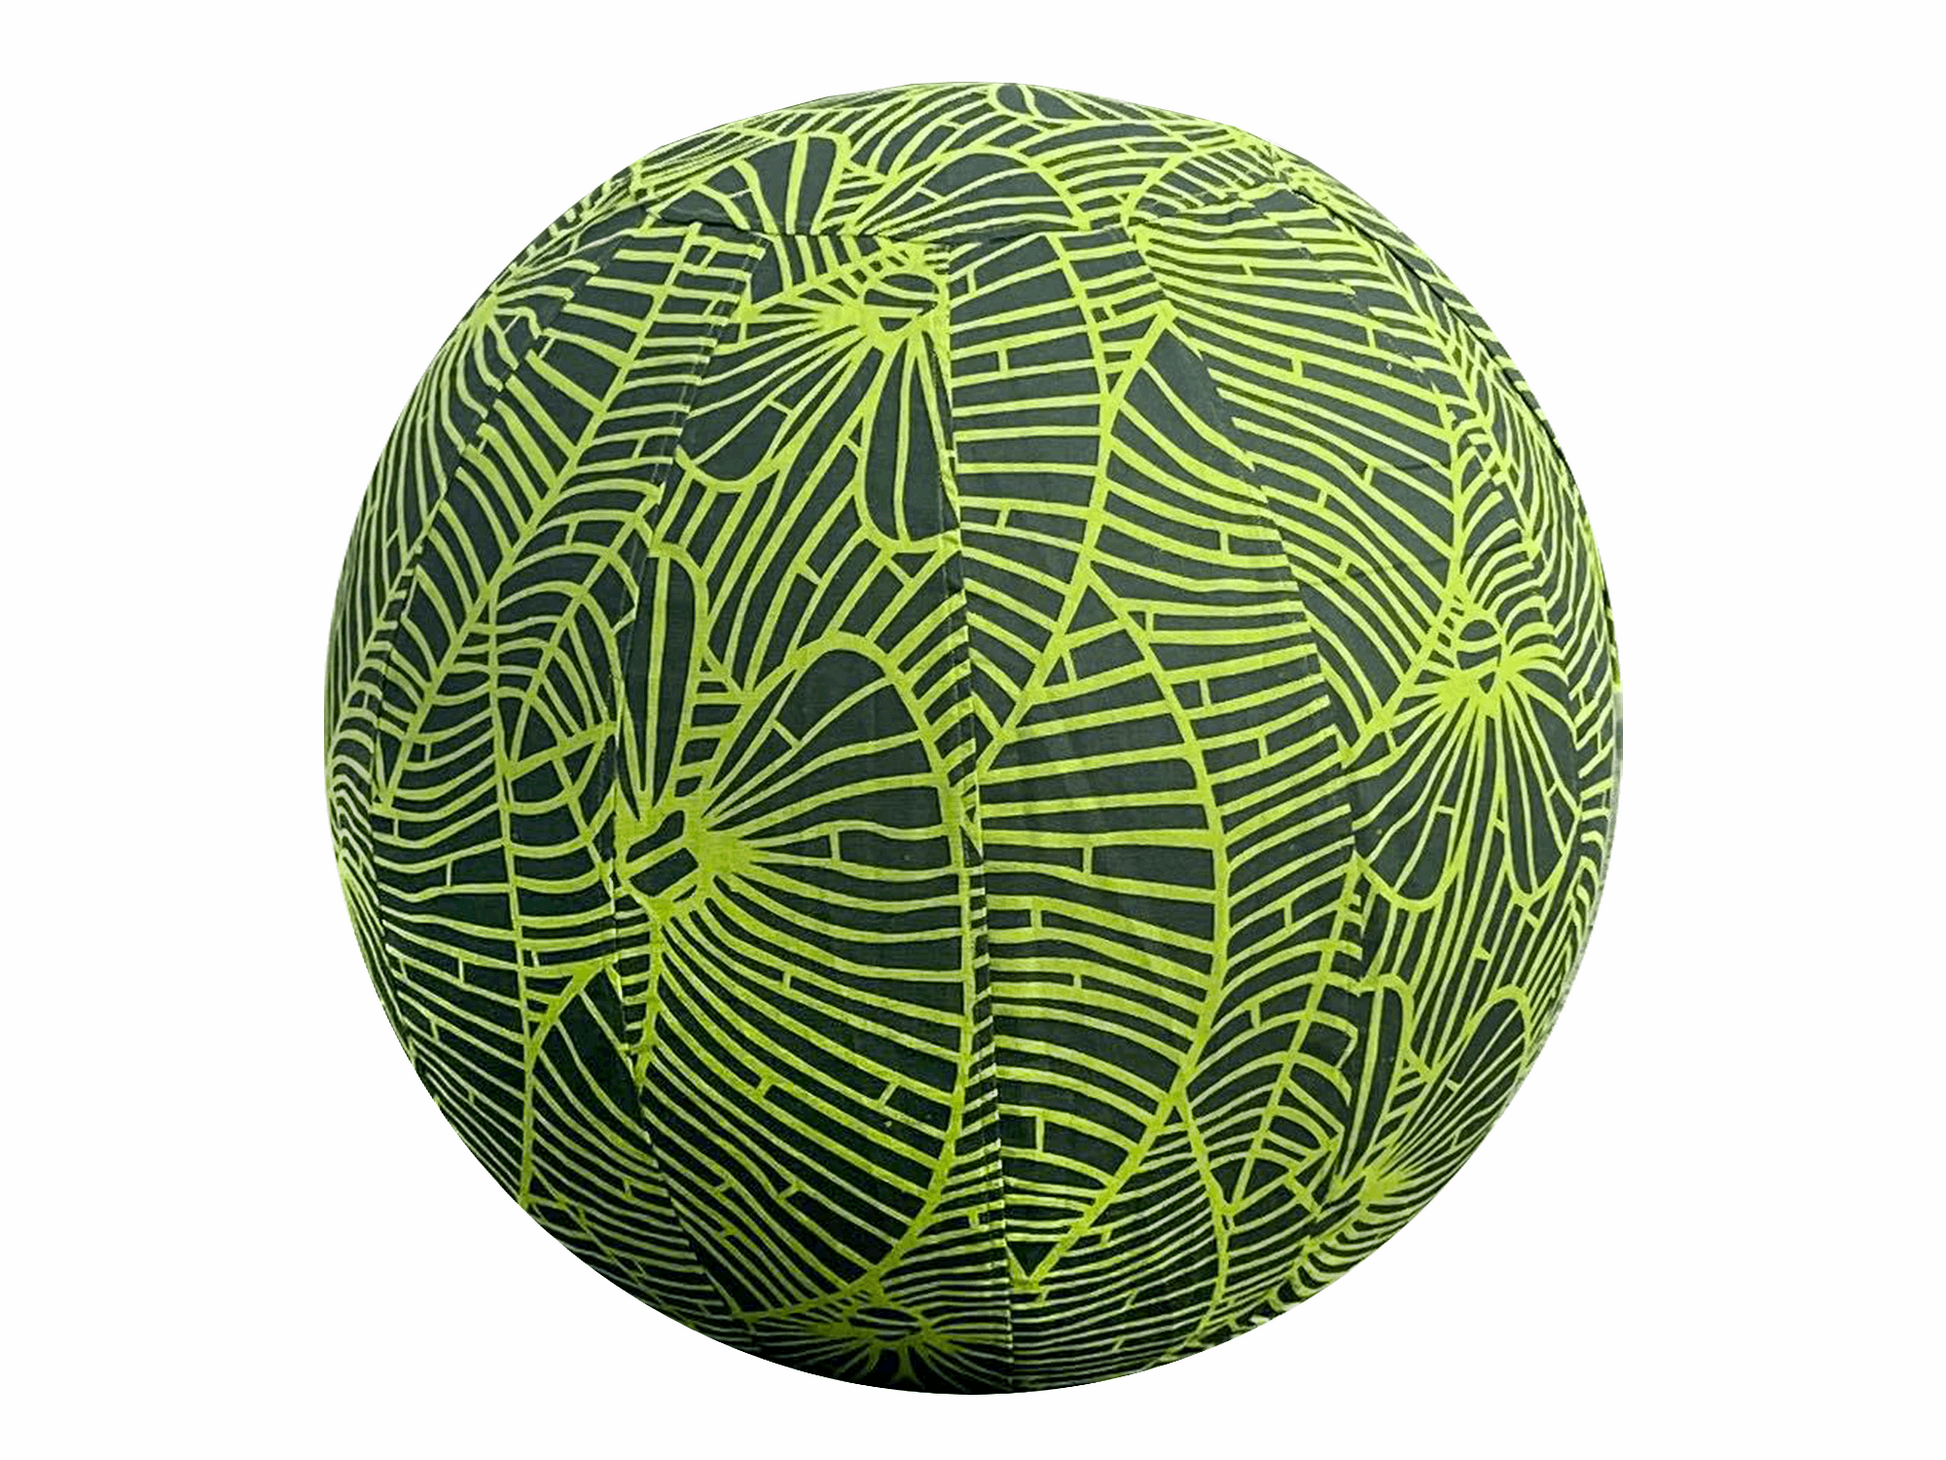 55cm Balance Ball / Yoga Ball Cover: Jungle Green Palm Leaf